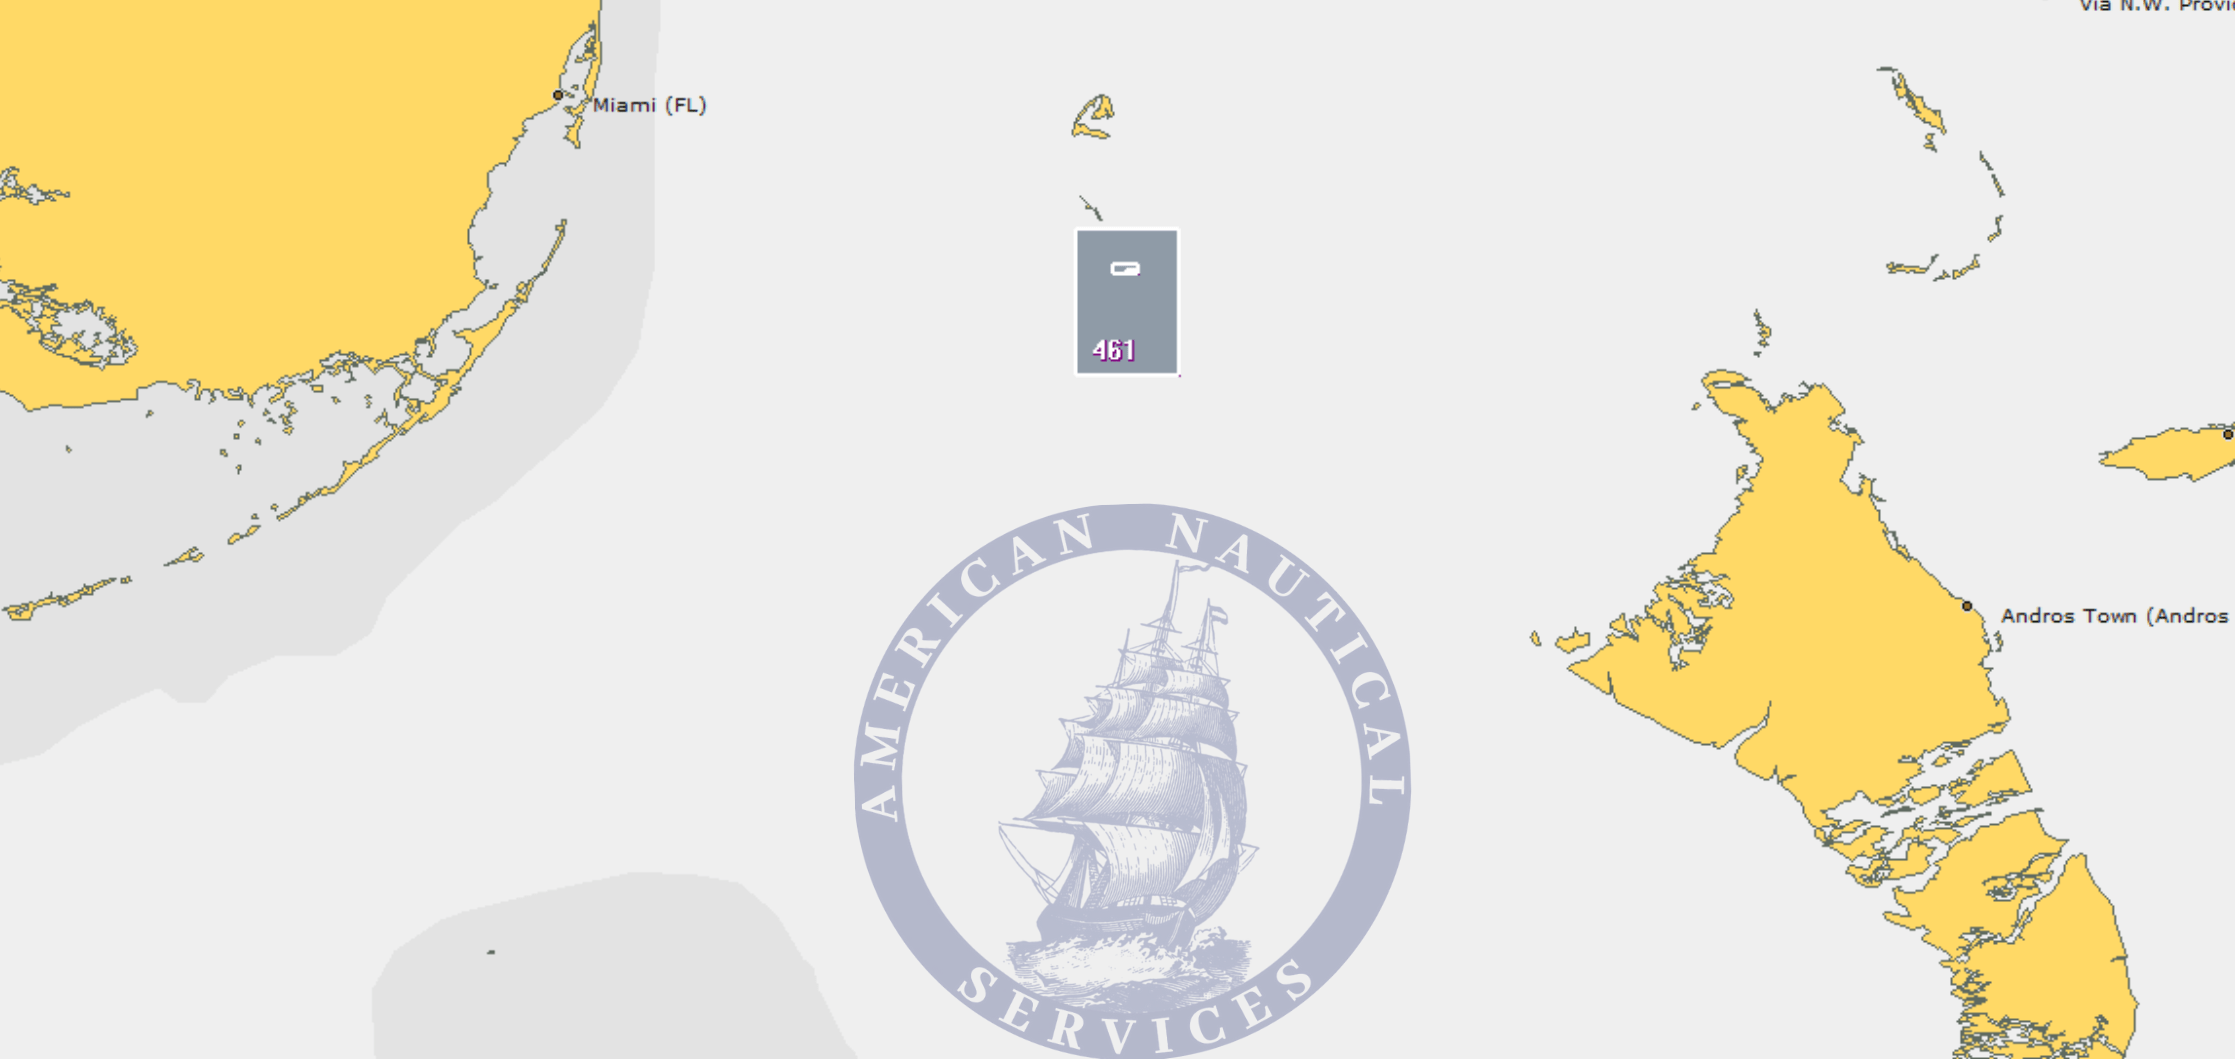 British Admiralty Nautical Chart 461: Ocean Cay